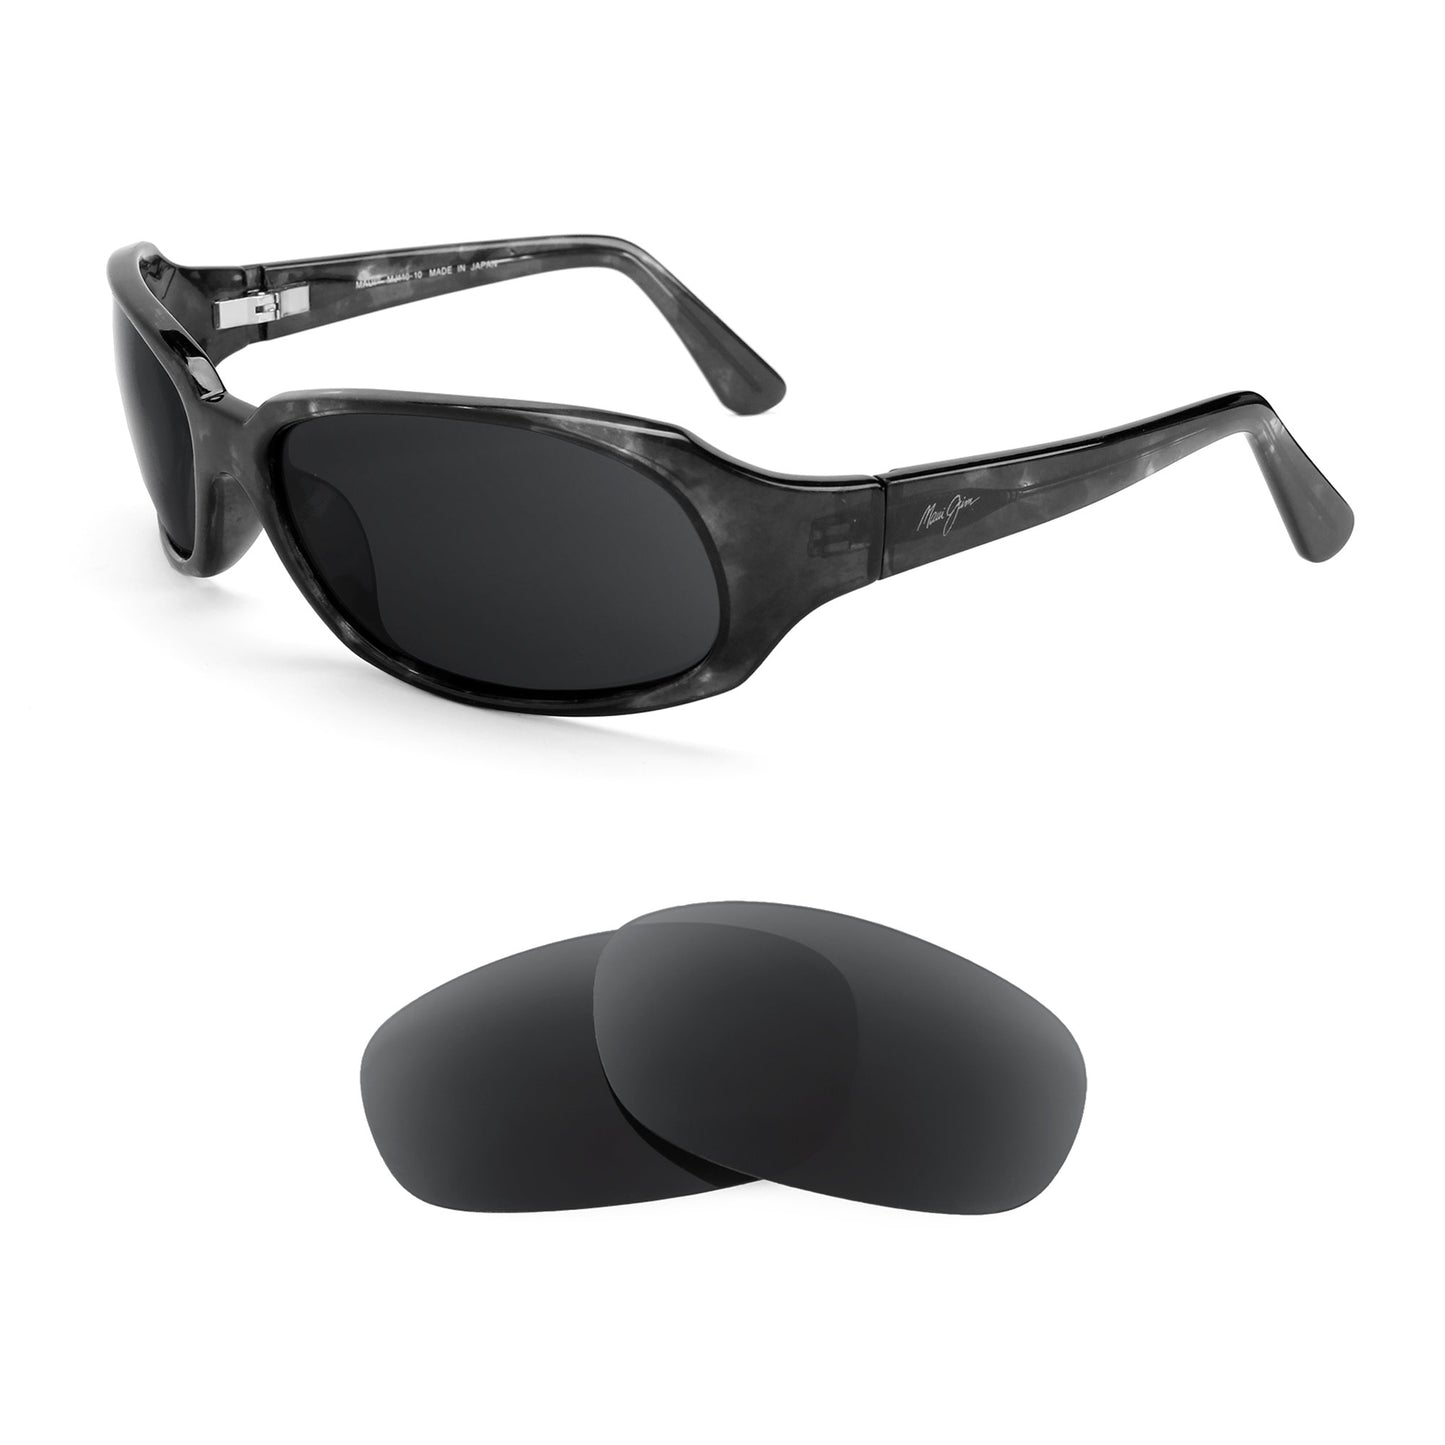 Maui Jim Navigator MJ110 sunglasses with replacement lenses